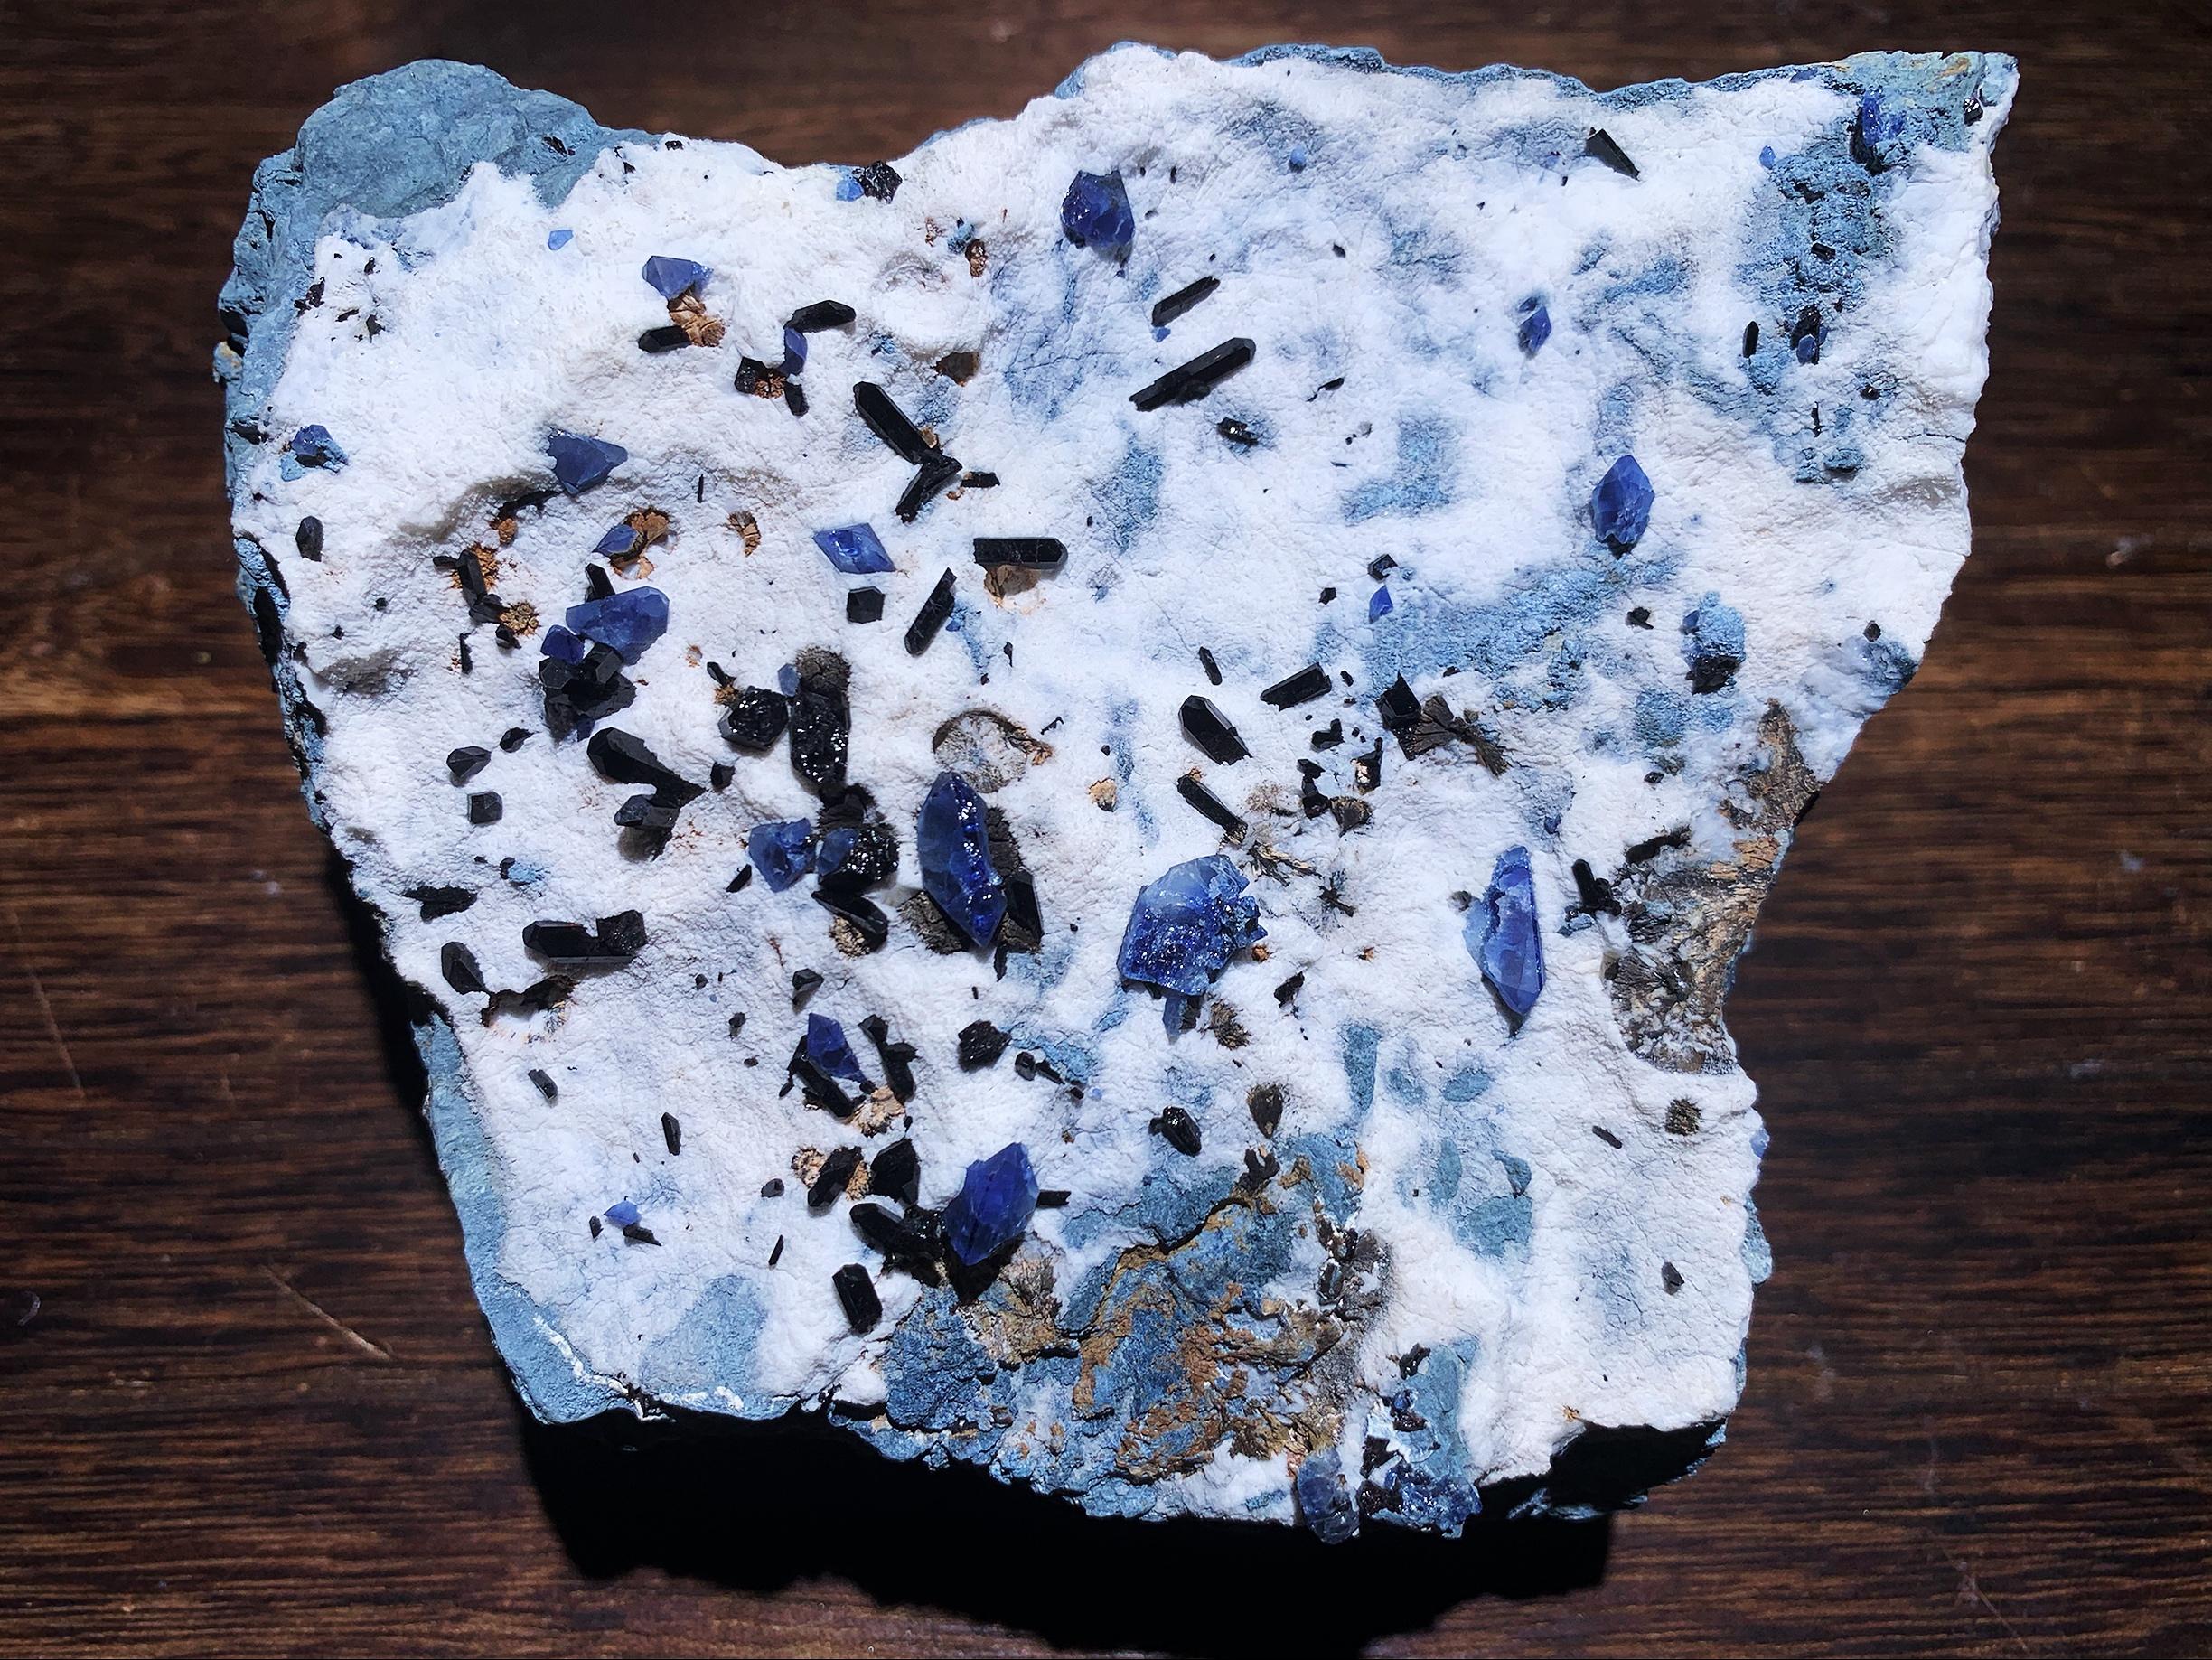 1,painite,铝硼锆钙石,这是1951年在缅甸抹谷(mogok)地区宝石砂恐中